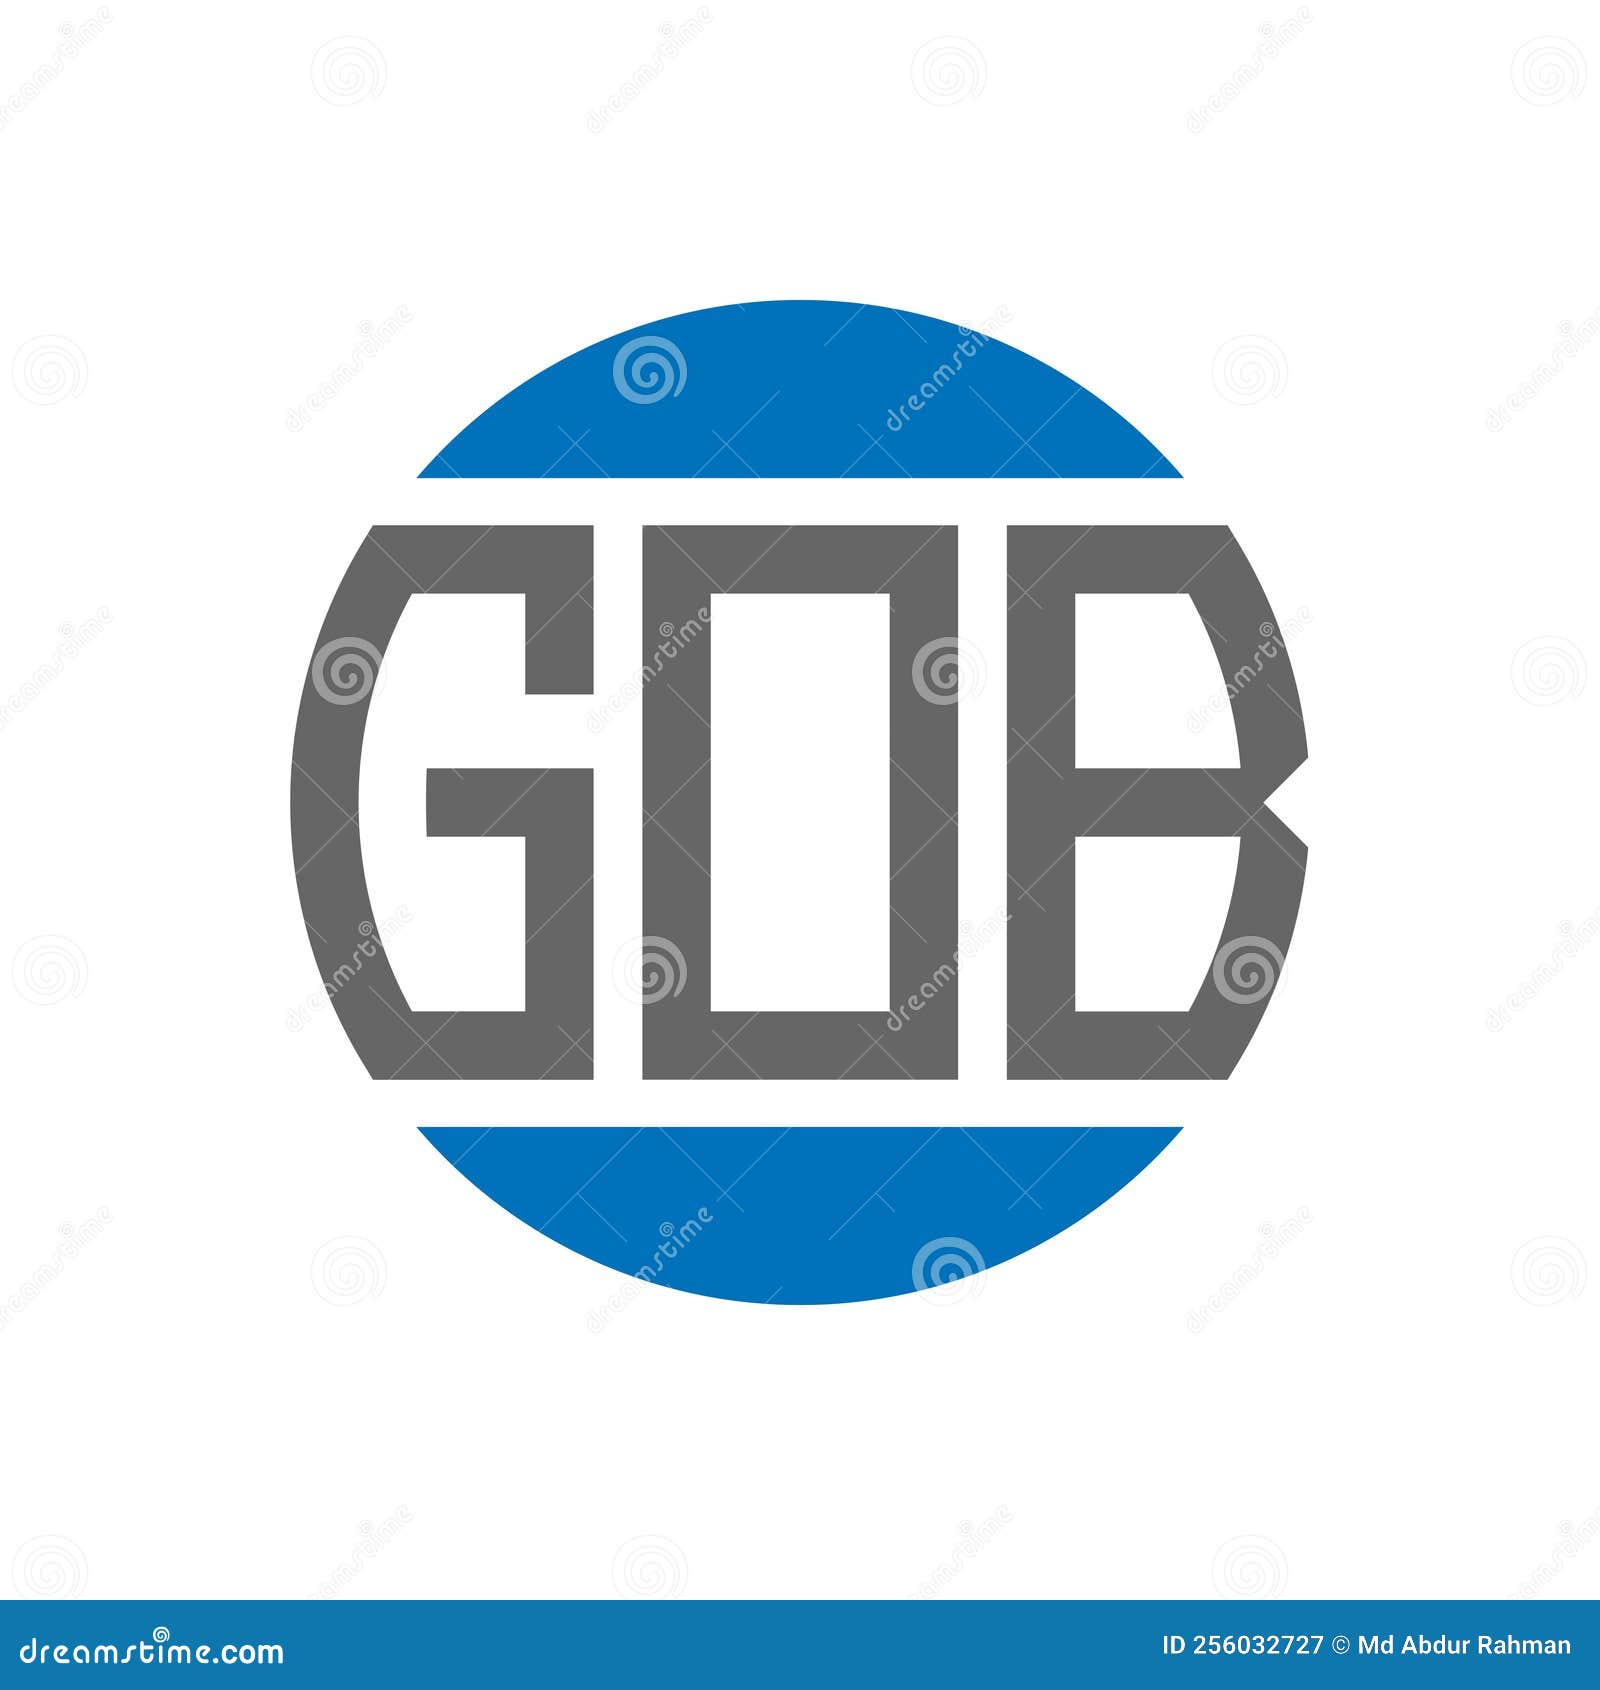 gob letter logo  on white background. gob creative initials circle logo concept. gob letter 